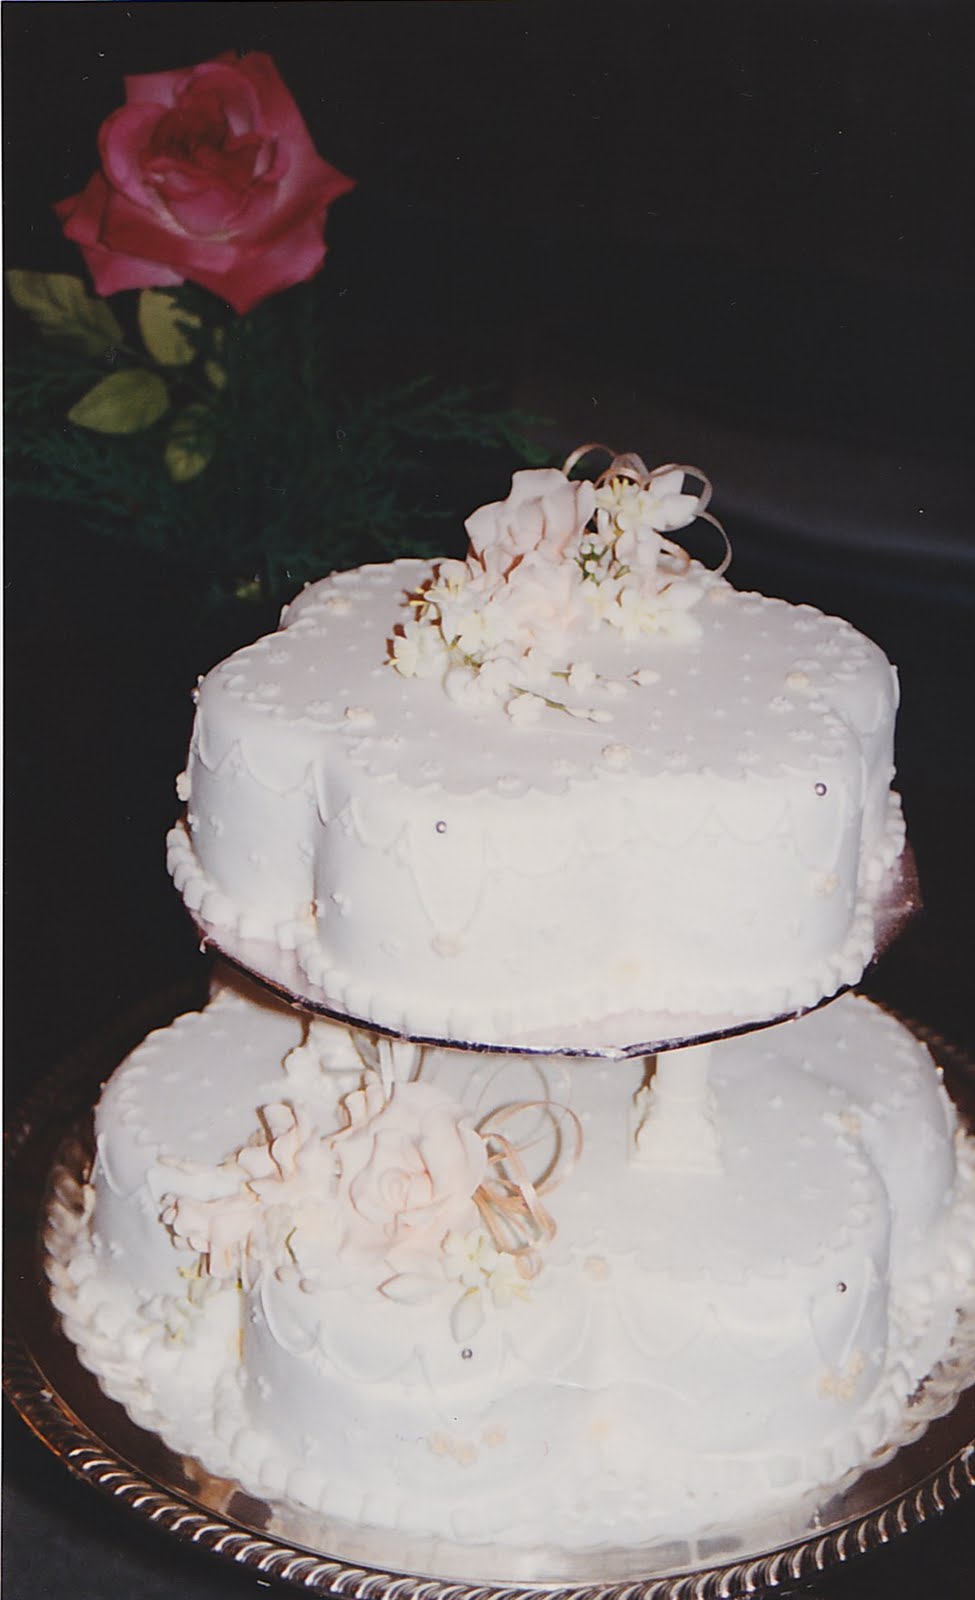 25th Wedding Anniversary cake